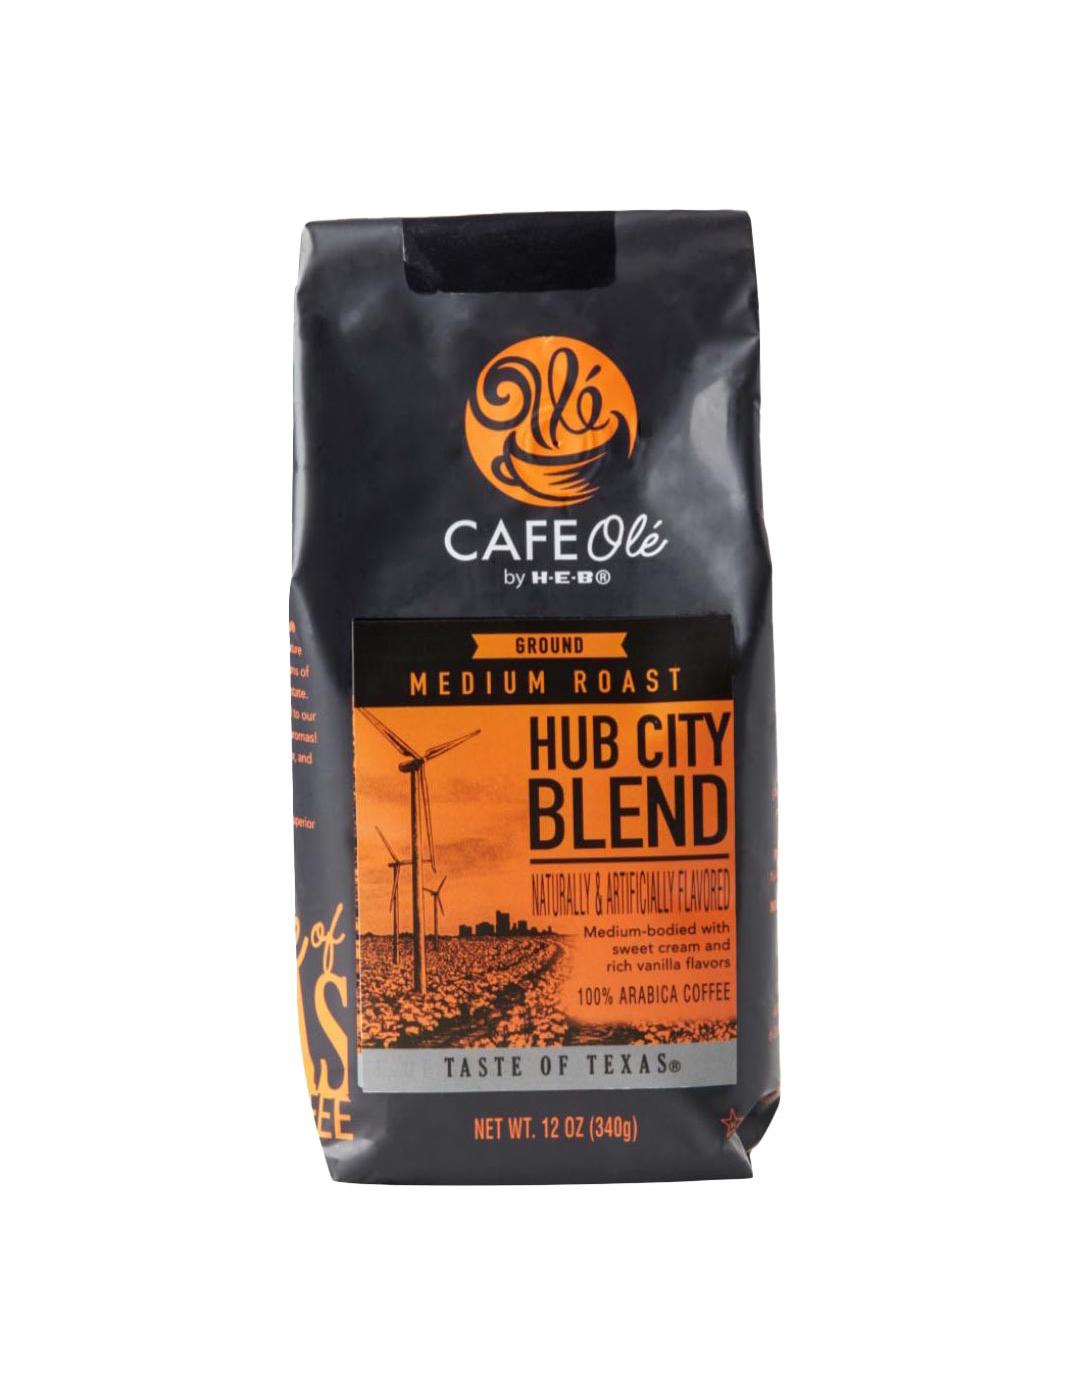 CAFE Olé by H-E-B Medium Roast Hub City Blend Ground Coffee; image 1 of 2